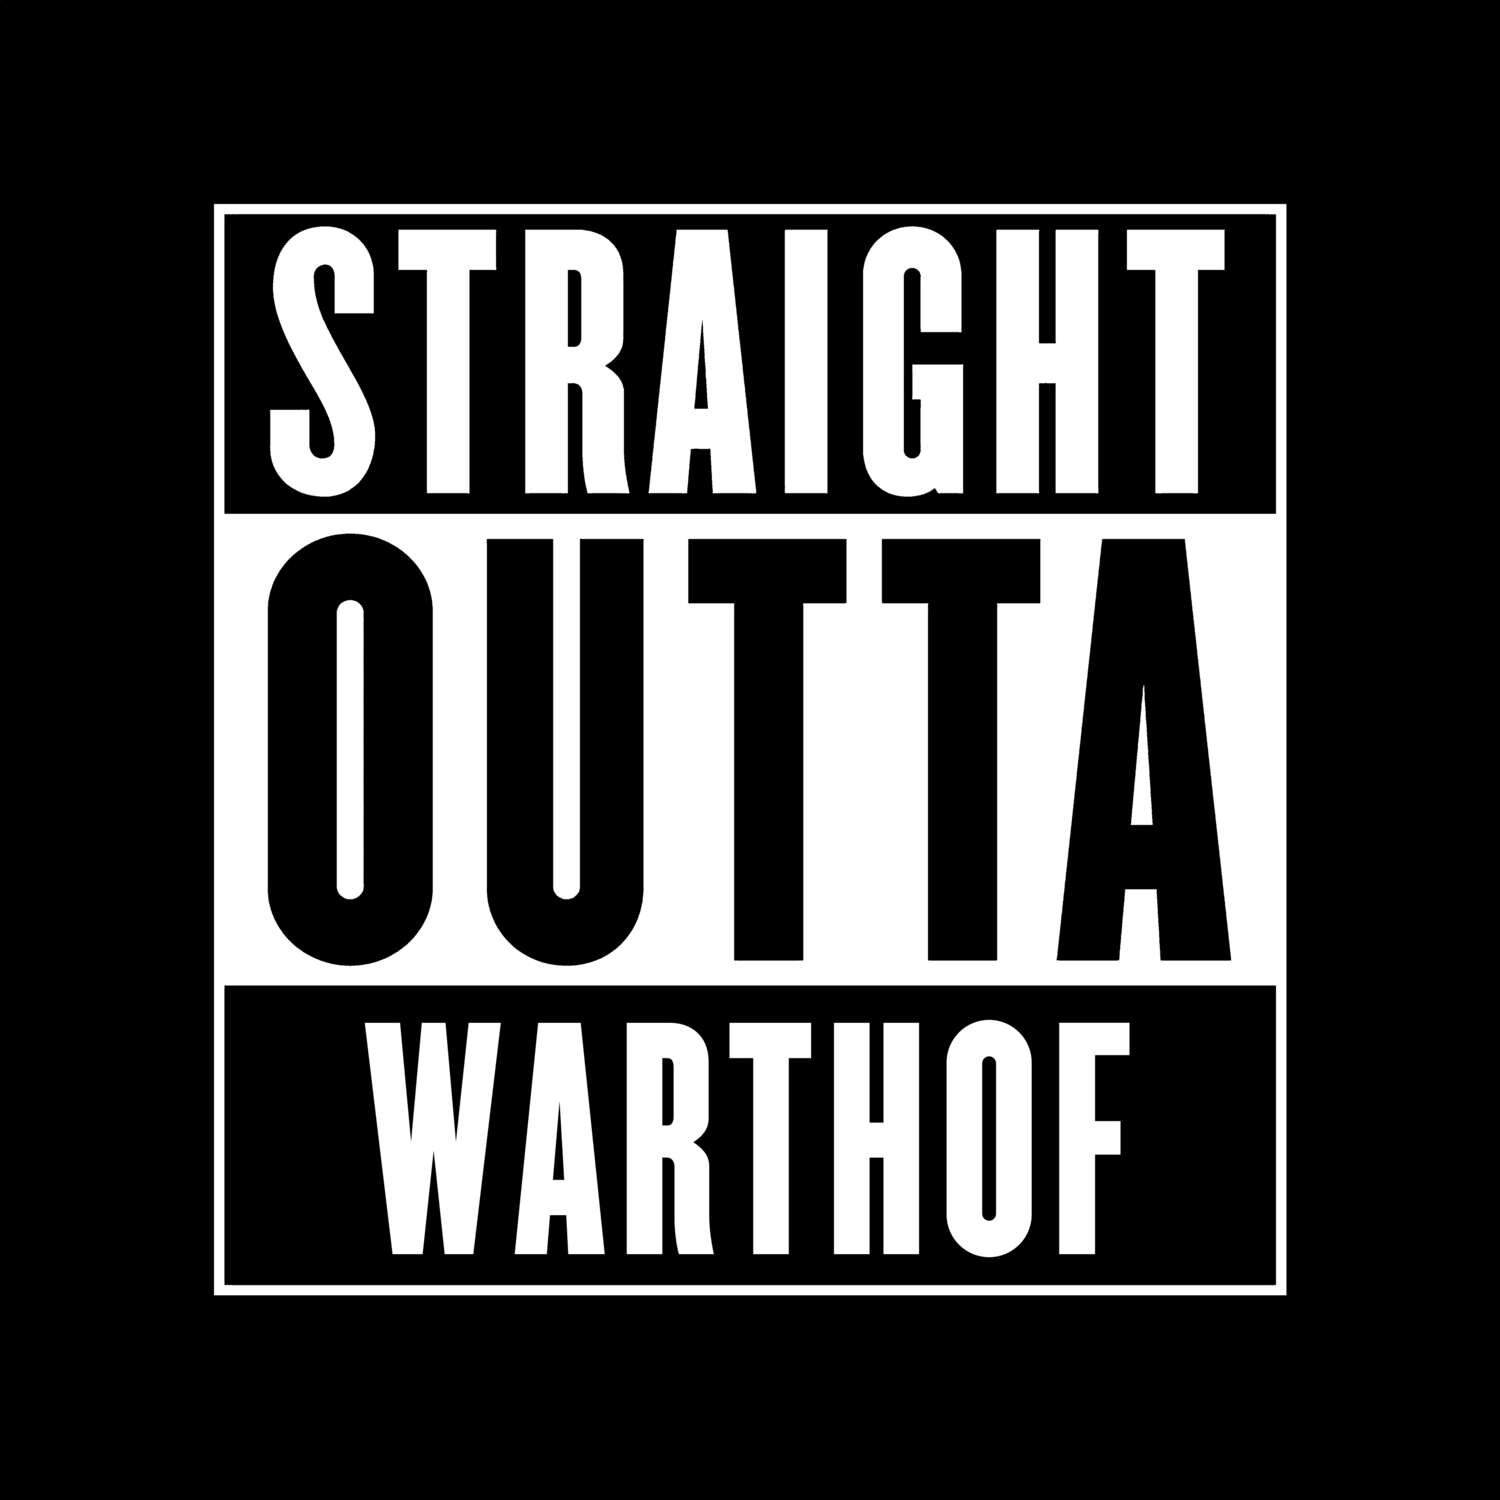 Warthof T-Shirt »Straight Outta«